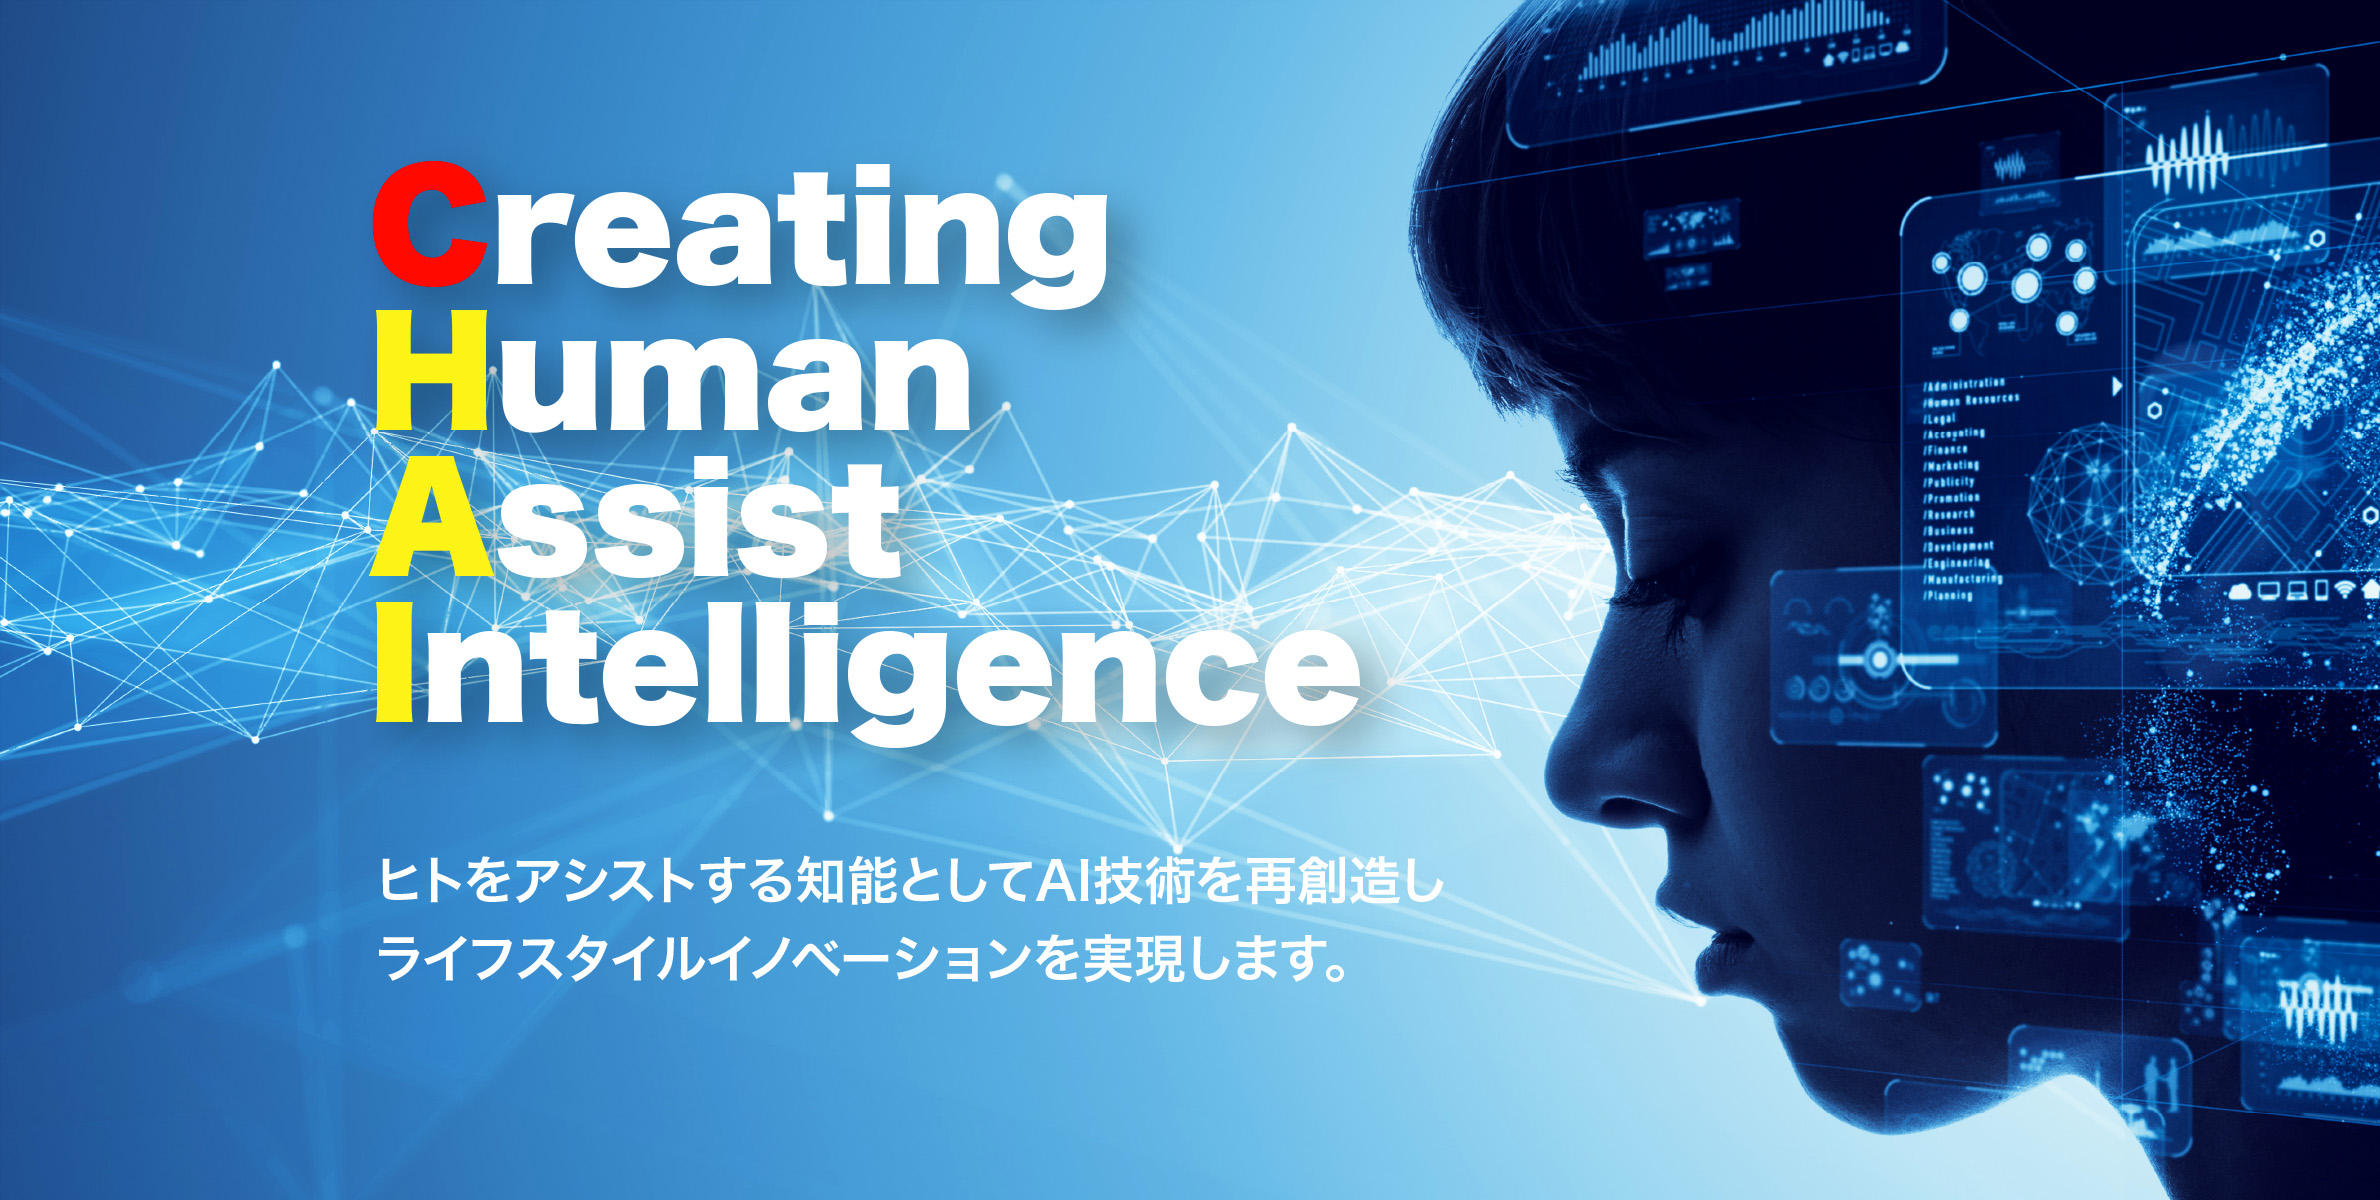 Creating Human Assist Intelligence